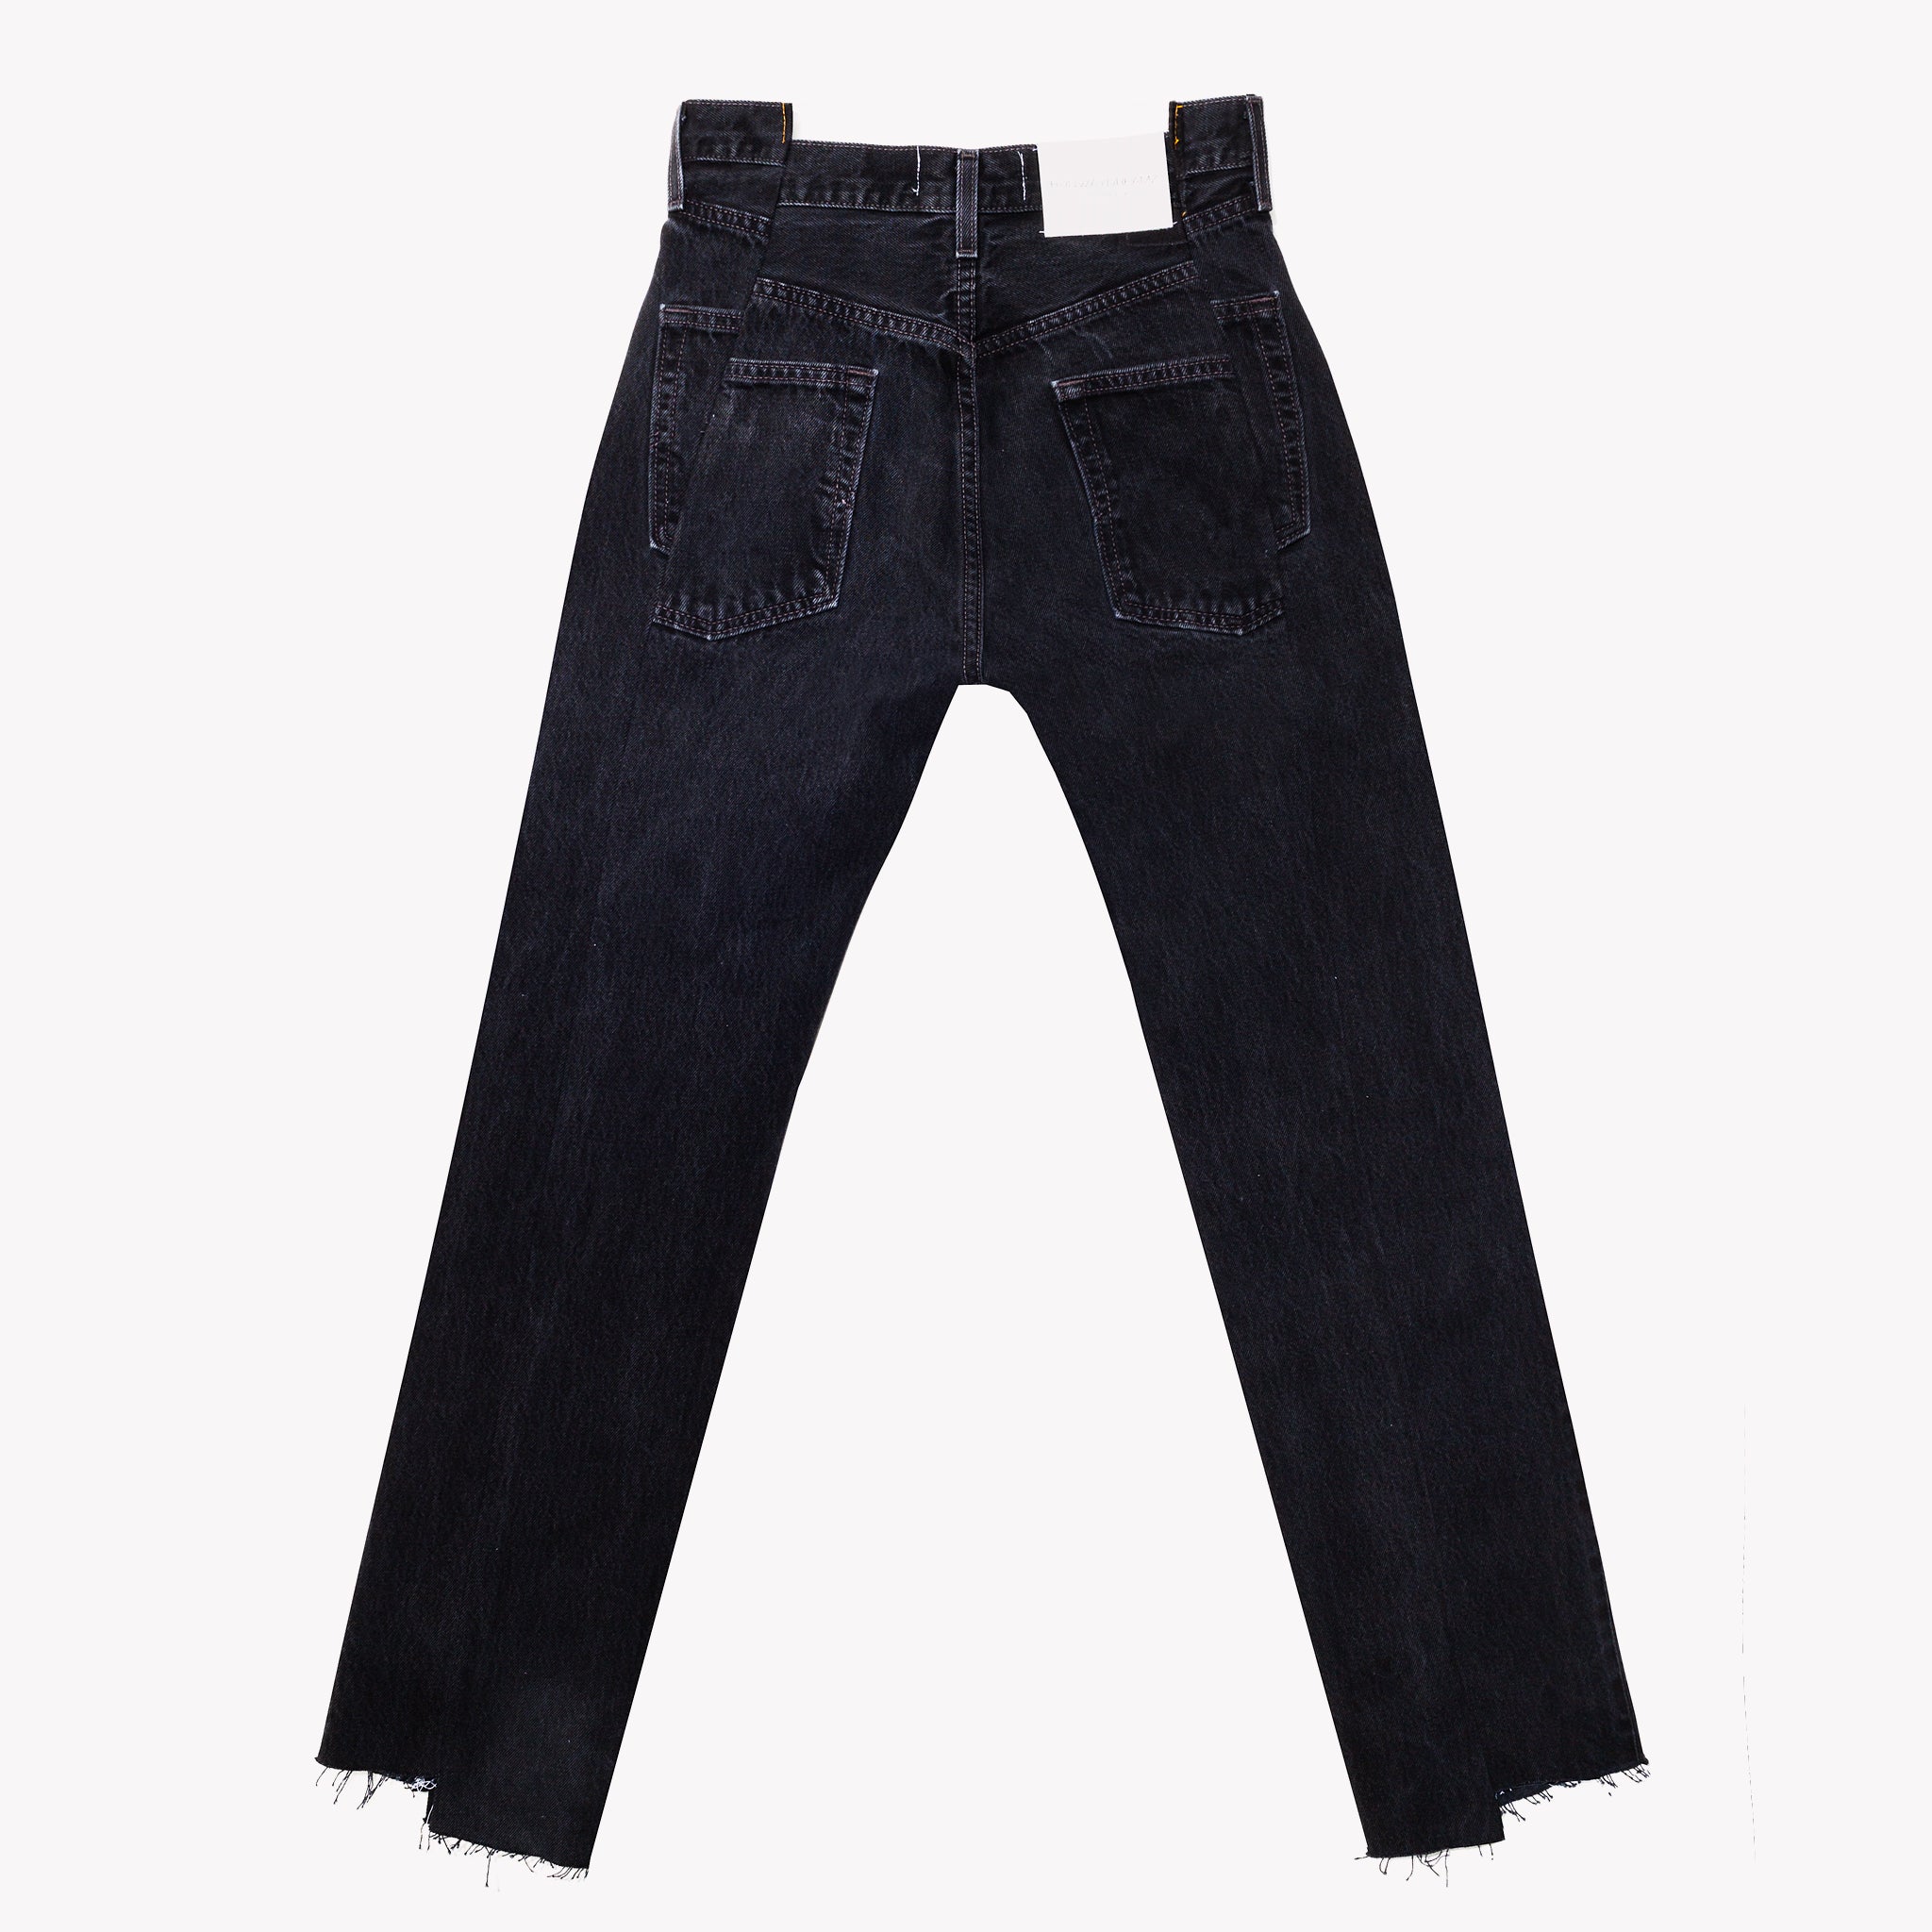 Deconstruct Vintage Black High Waisted Jeans